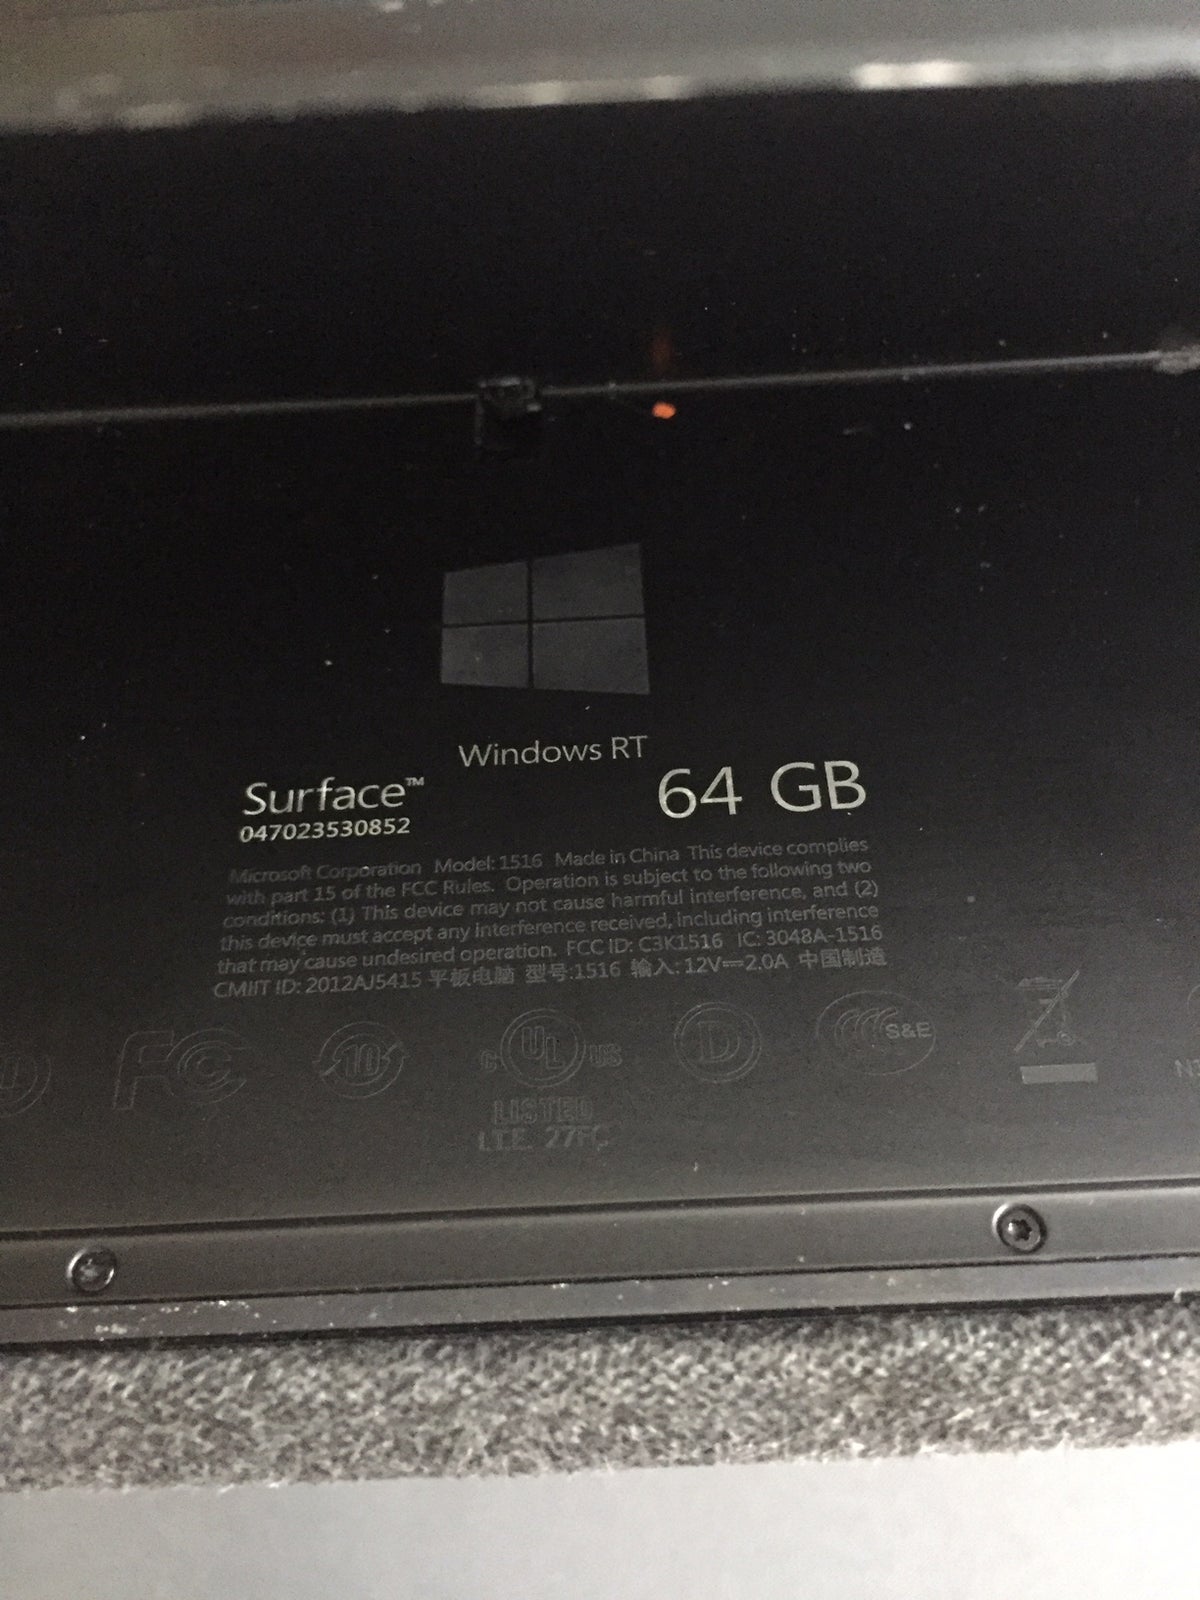 Microsoft RT Surface model 1516, 2 GB ram, 64 GB harddisk